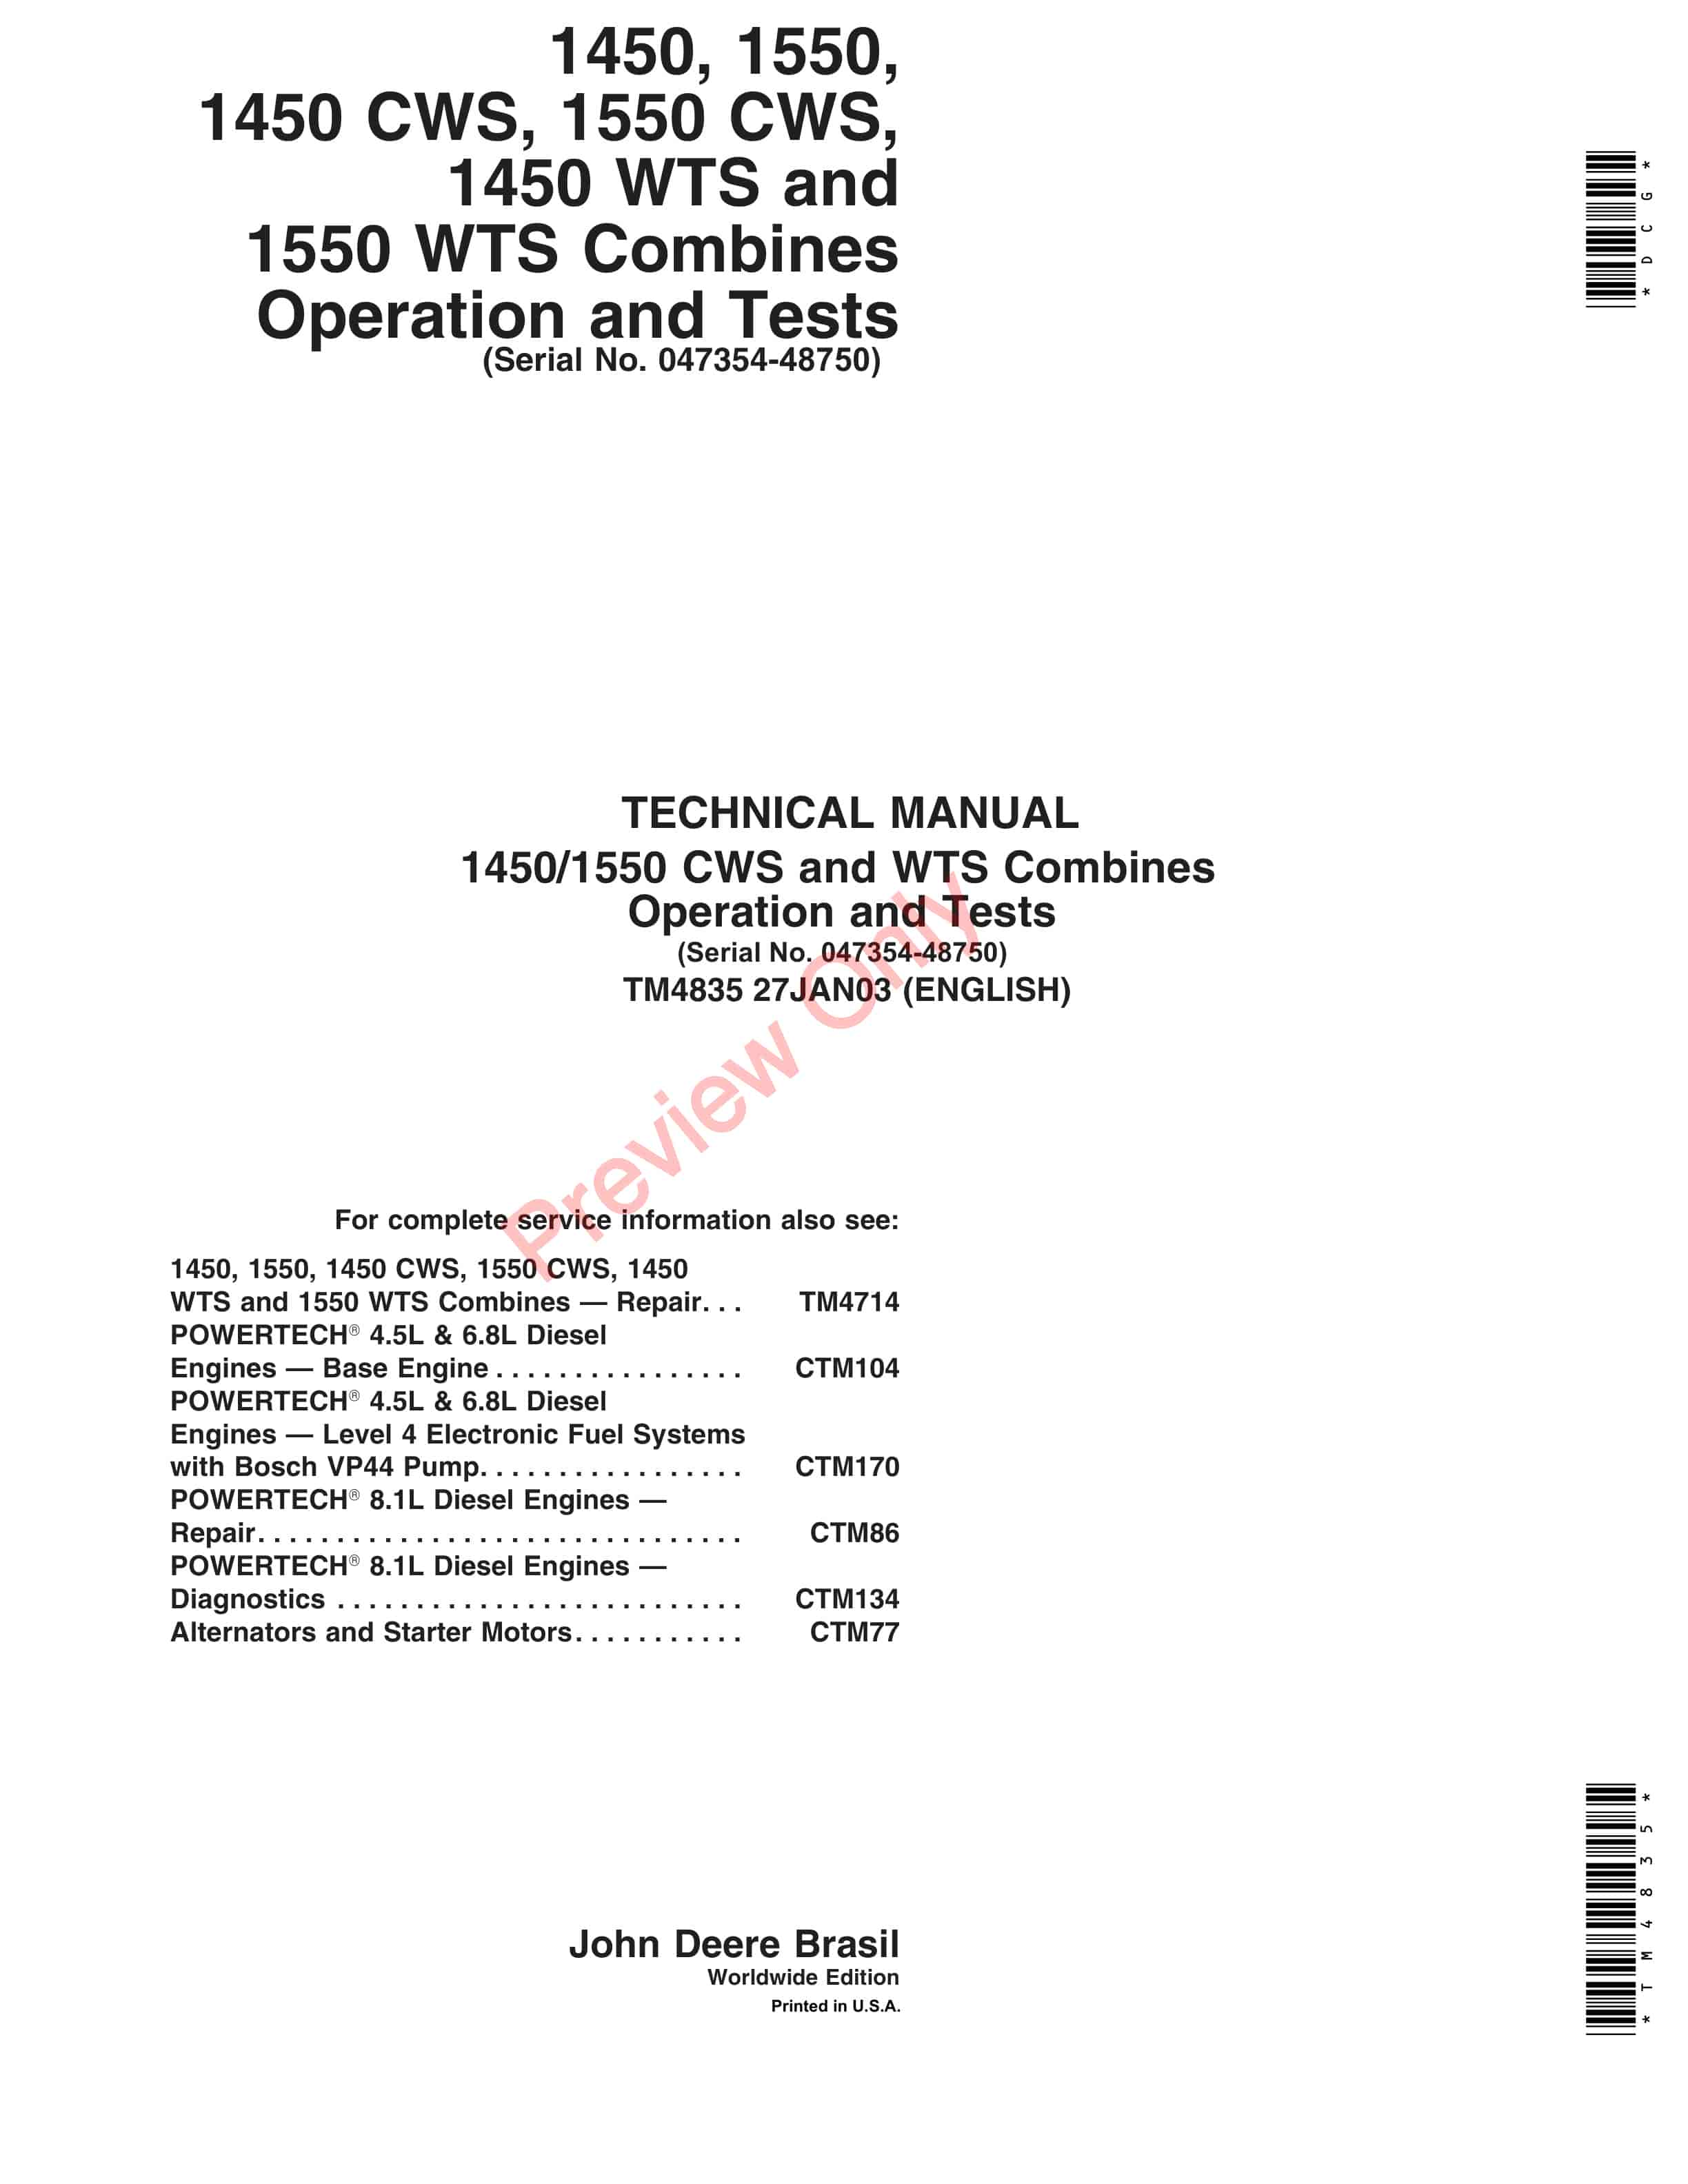 John Deere 1450 1550 1450CWS 1550 CWS Combines Technical Manual TM4835 2JAN03 1